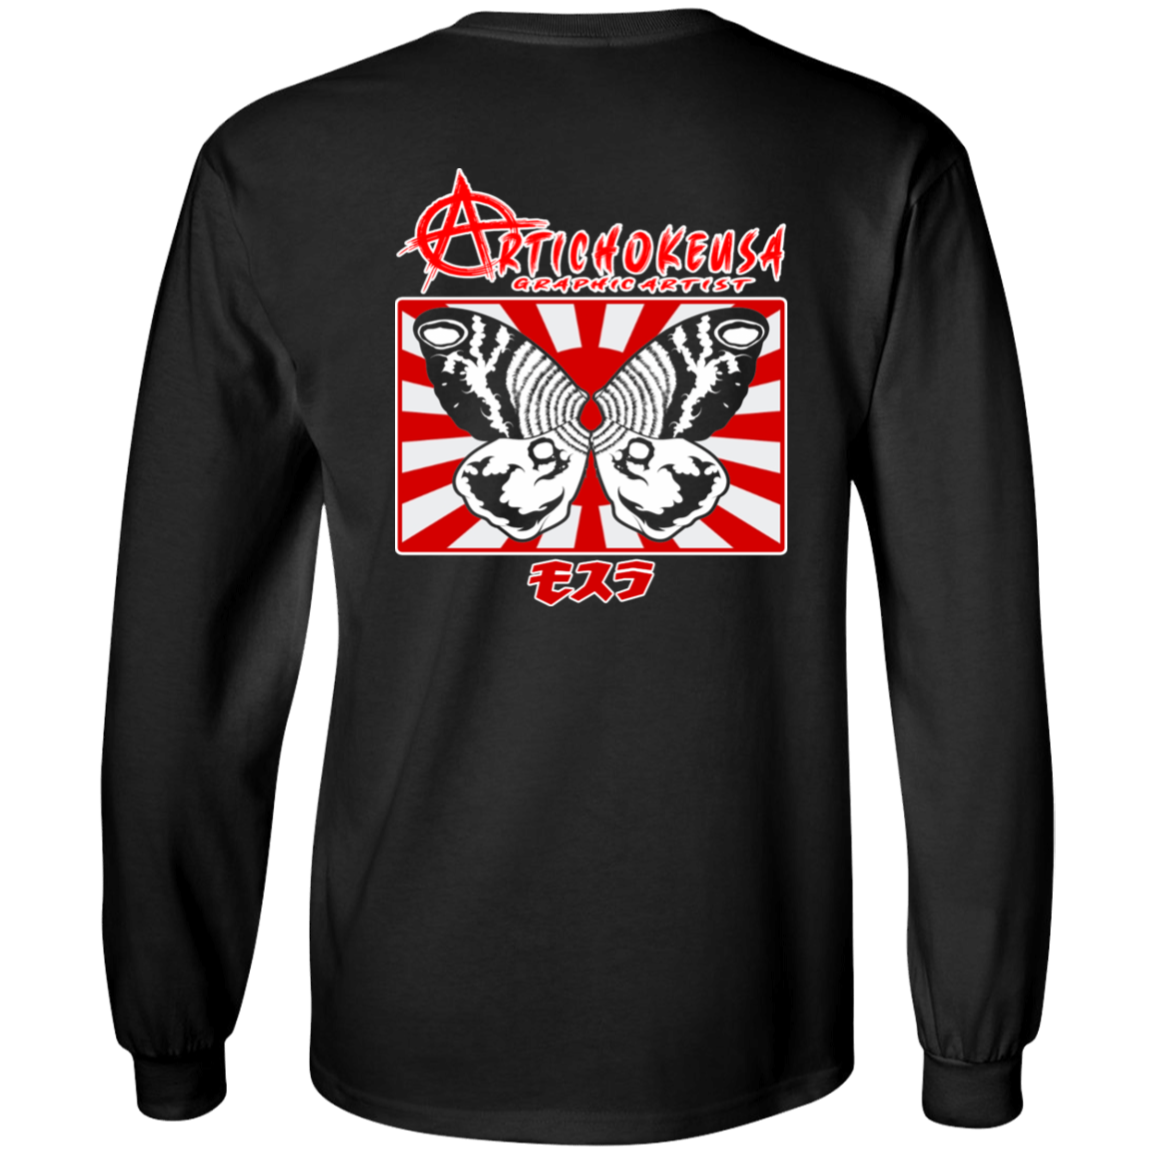 ArtichokeUSA Character and Font design. Shobijin (Twins)/Mothra Fan Art . Let's Create Your Own Design Today. Long Sleeve 100% Cotton T-Shirt